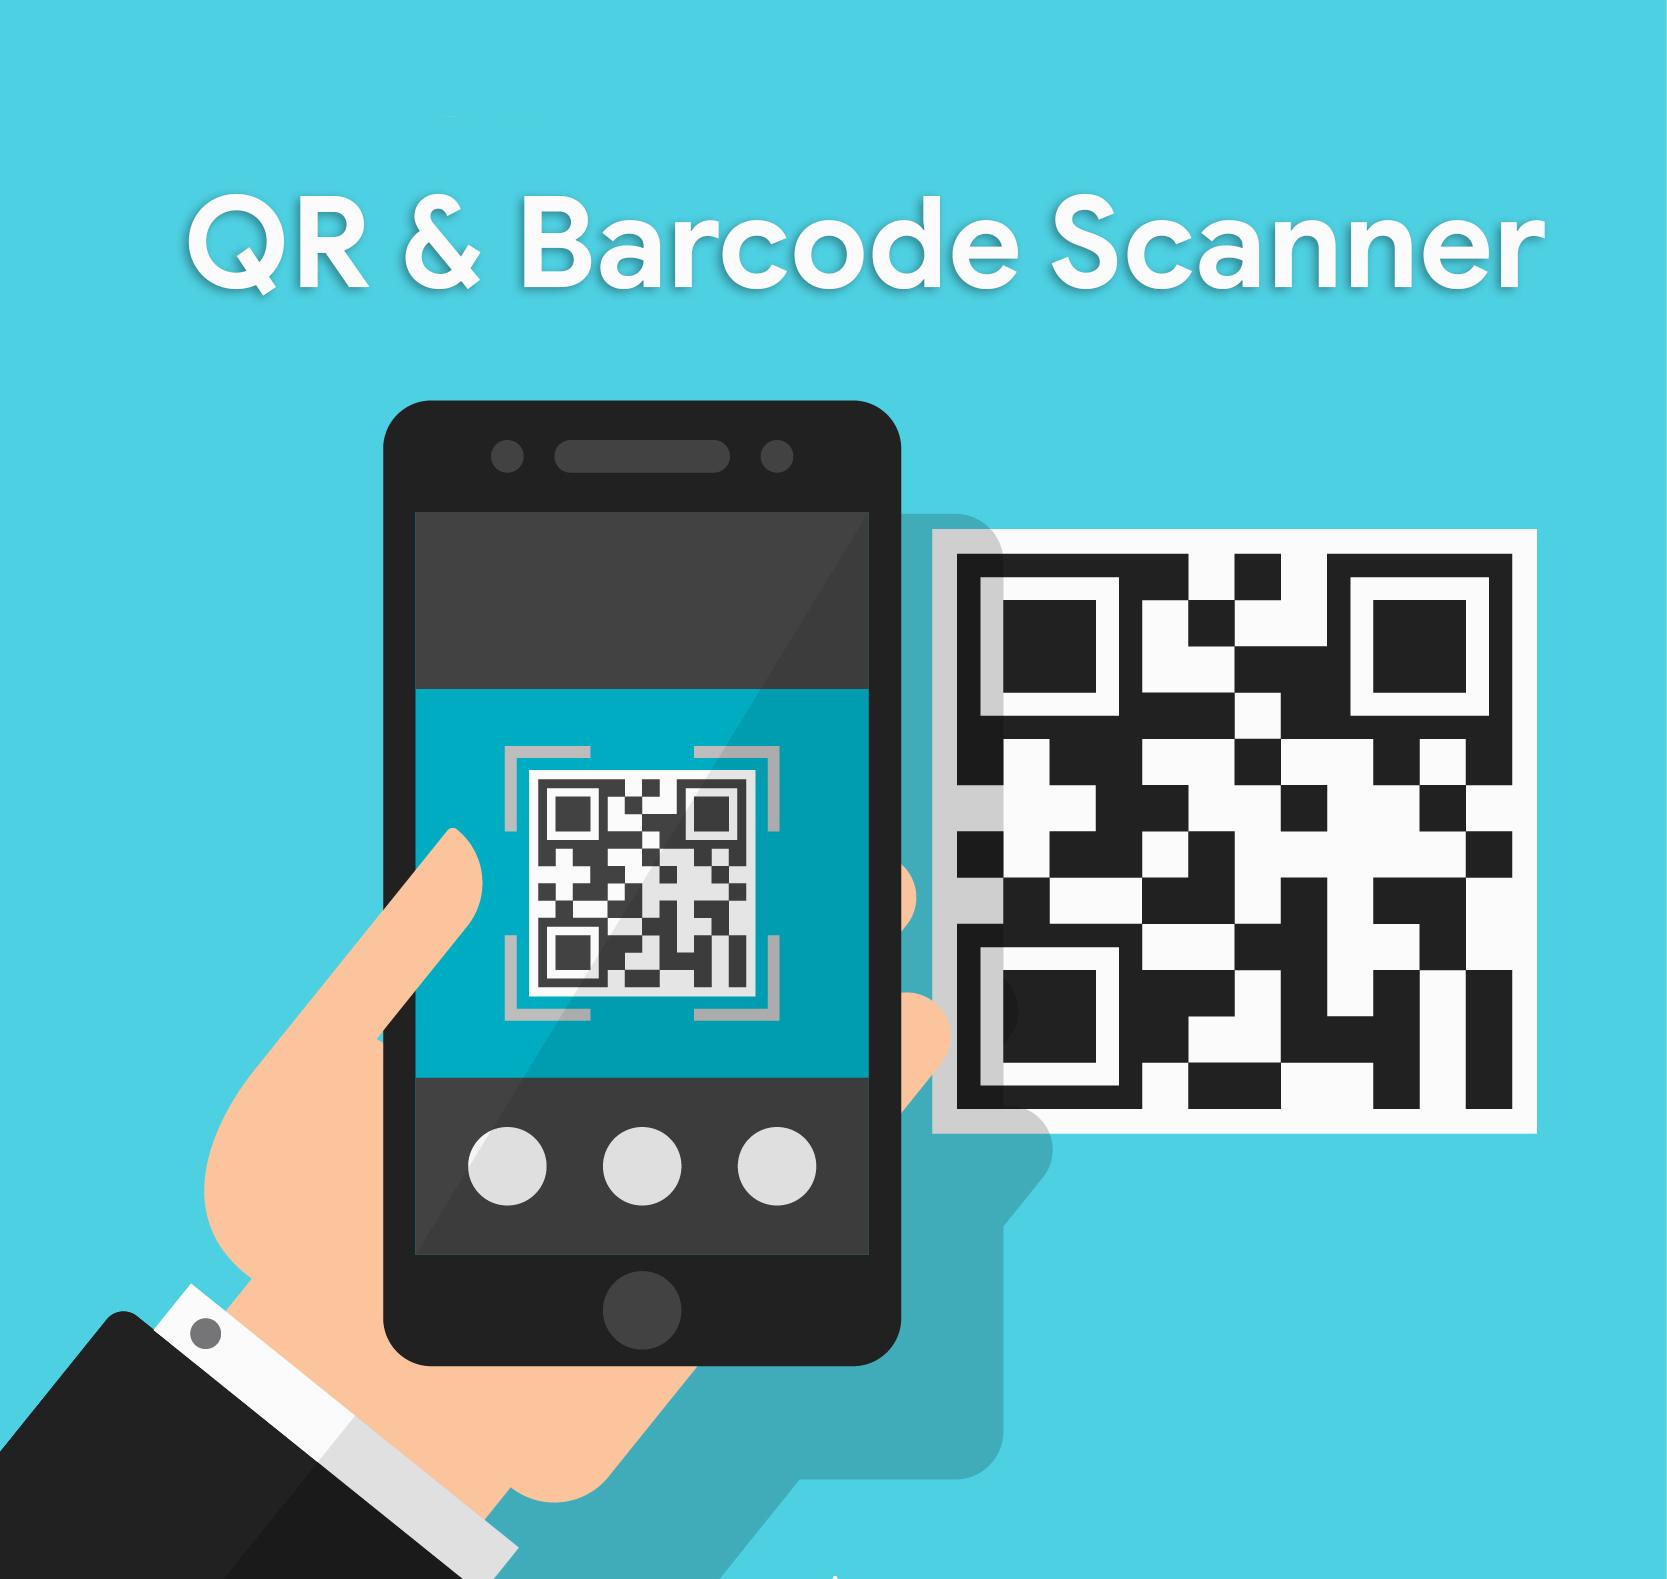 Сканер qr кода на телефоне андроид. QR код. Сканировать QR код. QR код мобильный телефон. Телефон сканирует QR код.